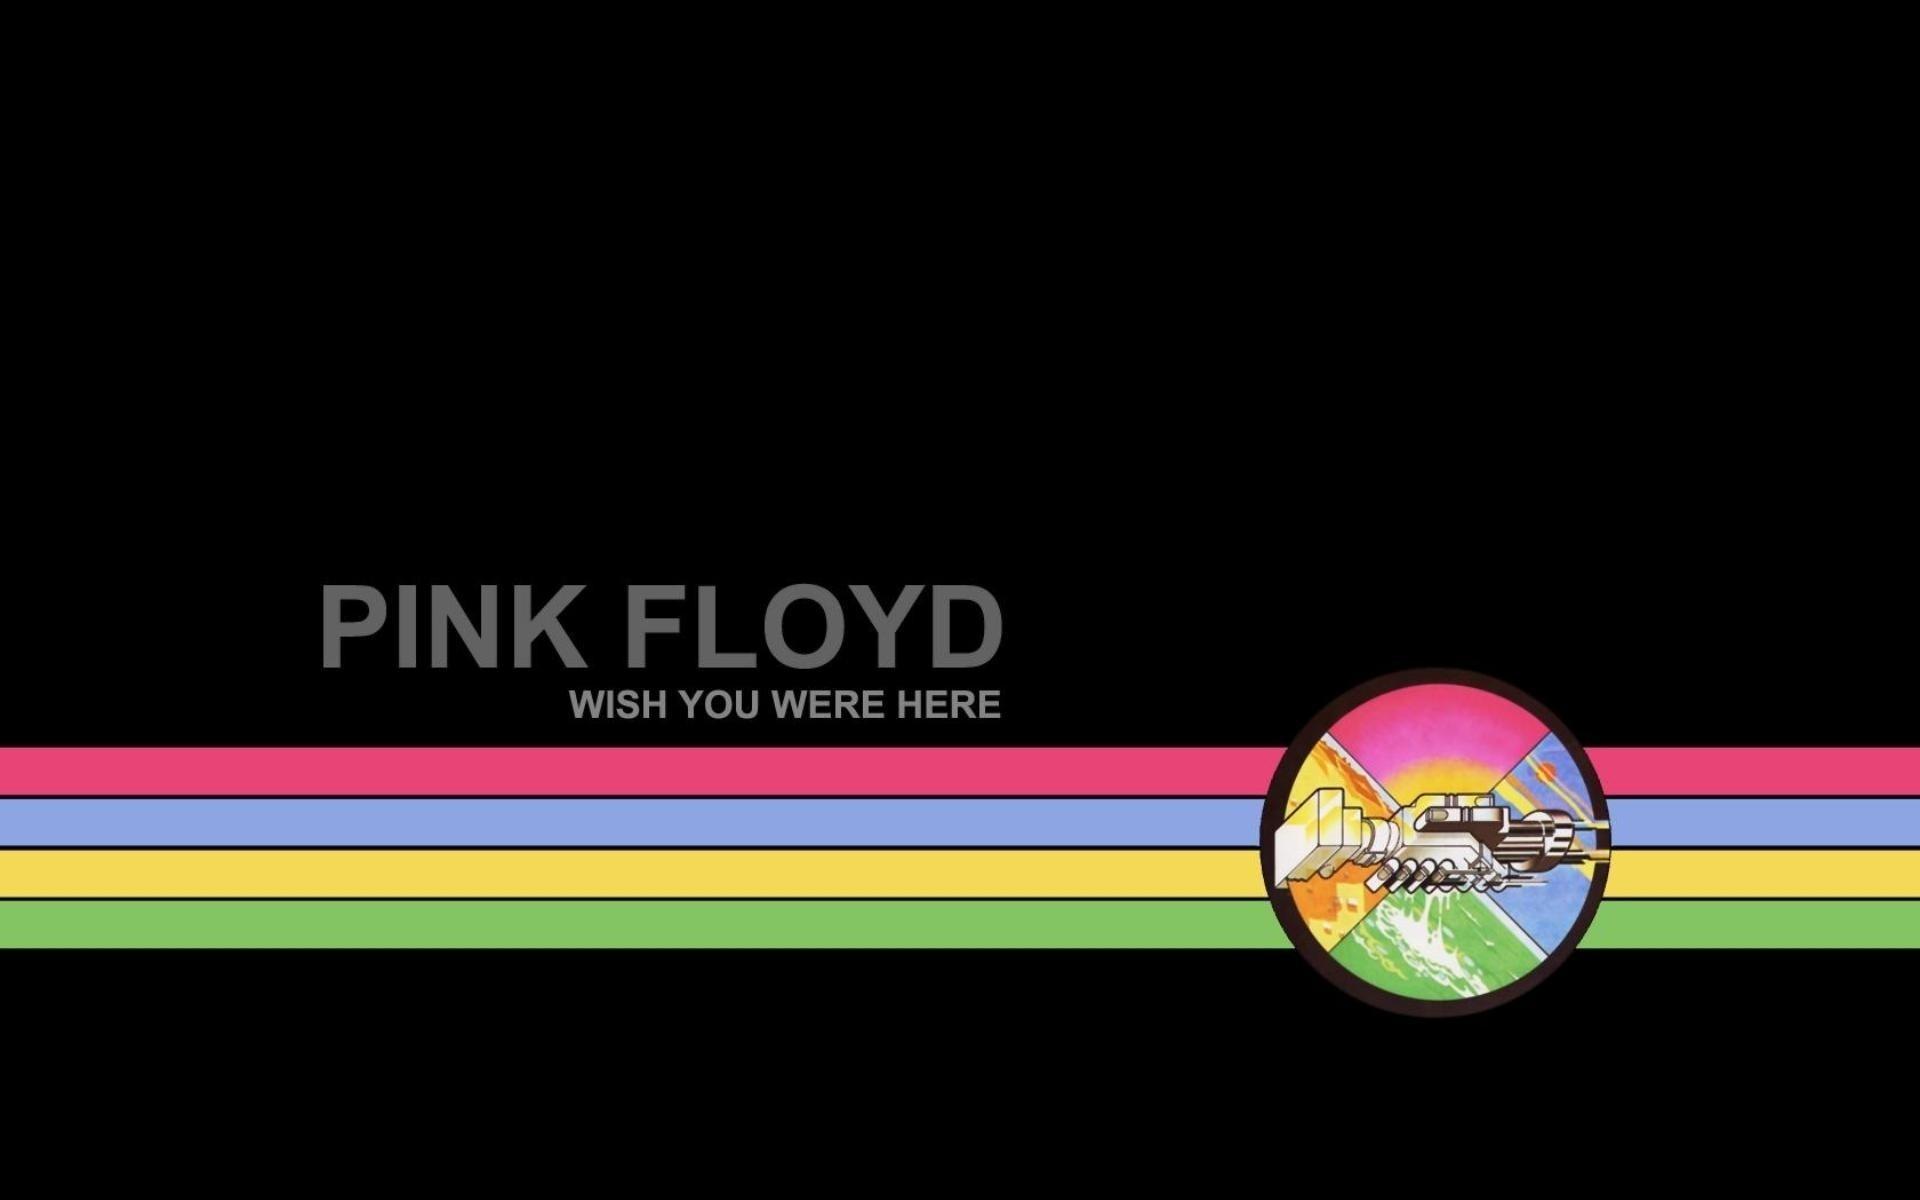 Pink floyd albums black background music wallpaper